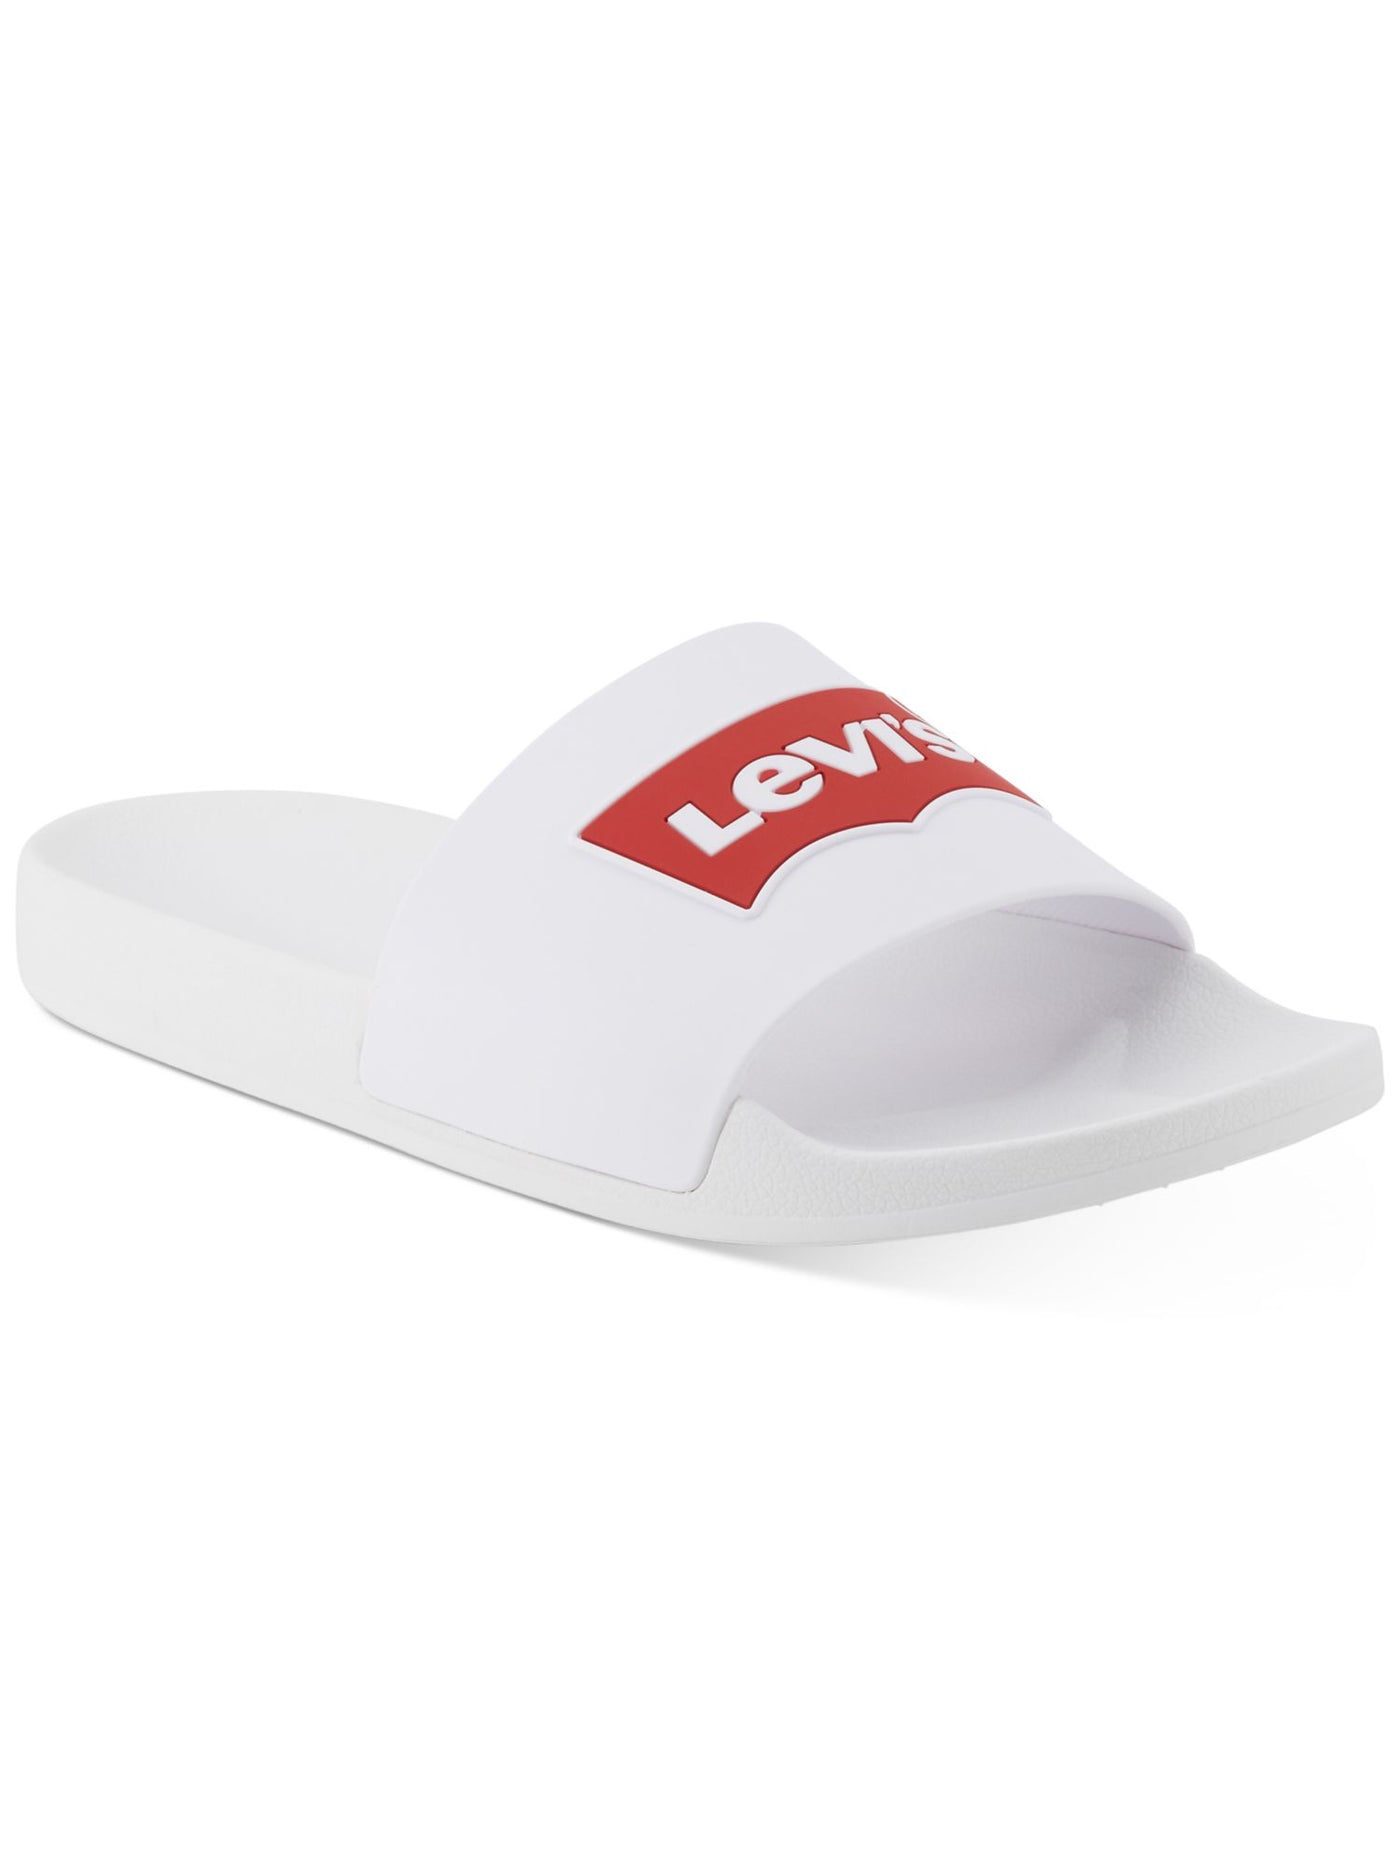 LEVI'S Mens White Batwing-logo Open Toe Slip On Slide Sandals Shoes 9-10